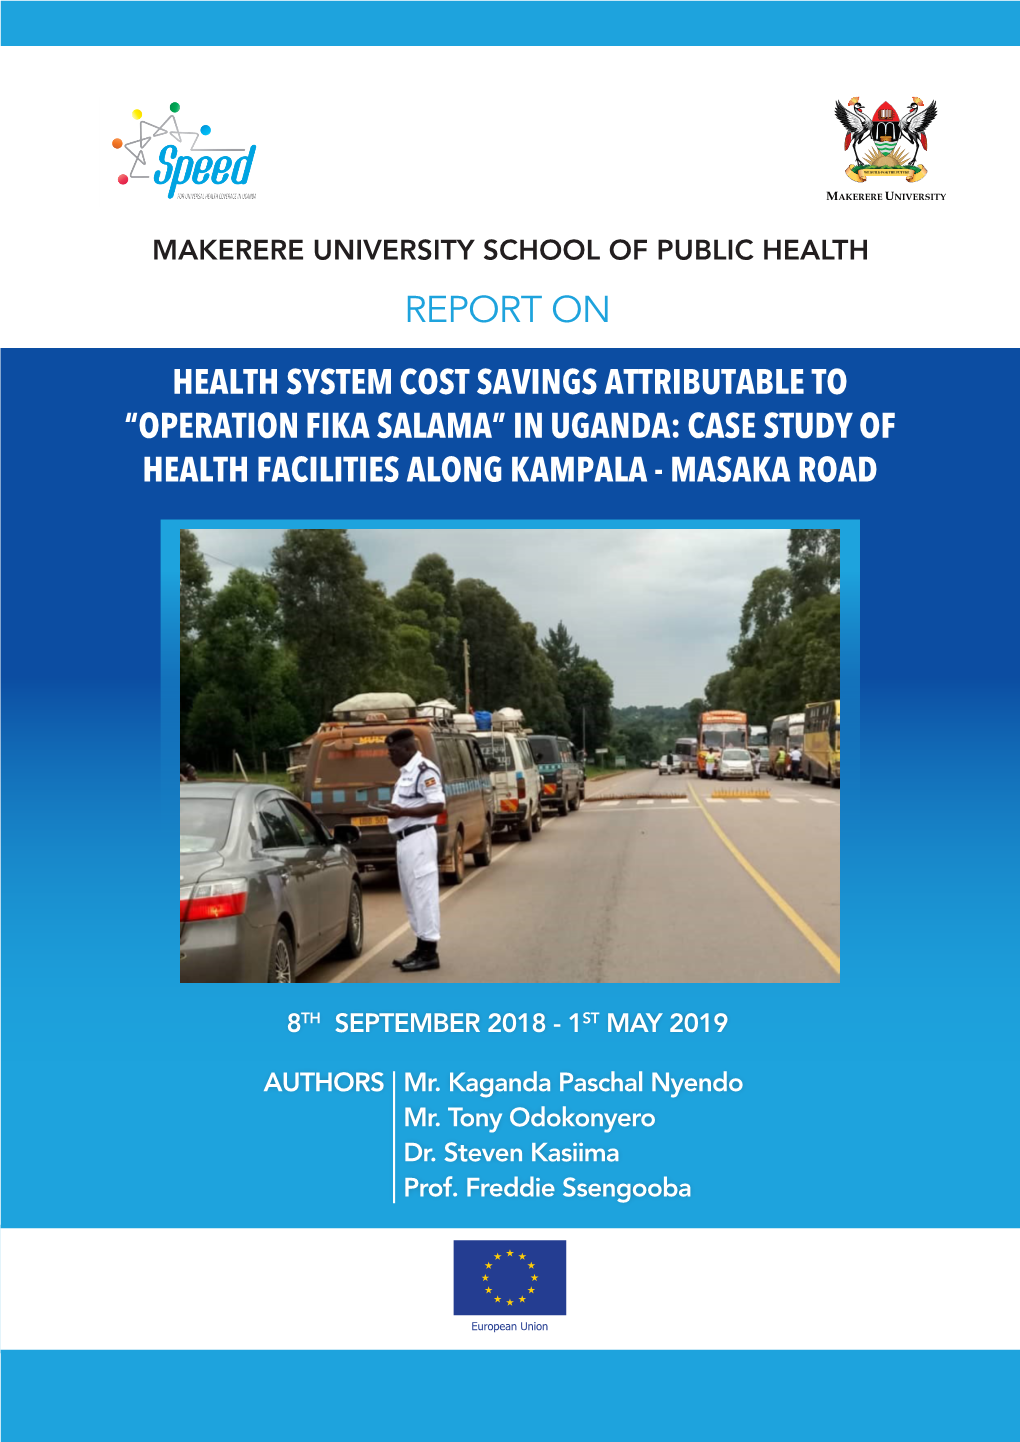 Report on Health System Cost Savings Attributable to “Operation Fika Salama” in Uganda: Case Study of Health Facilities Along Kampala - Masaka Road